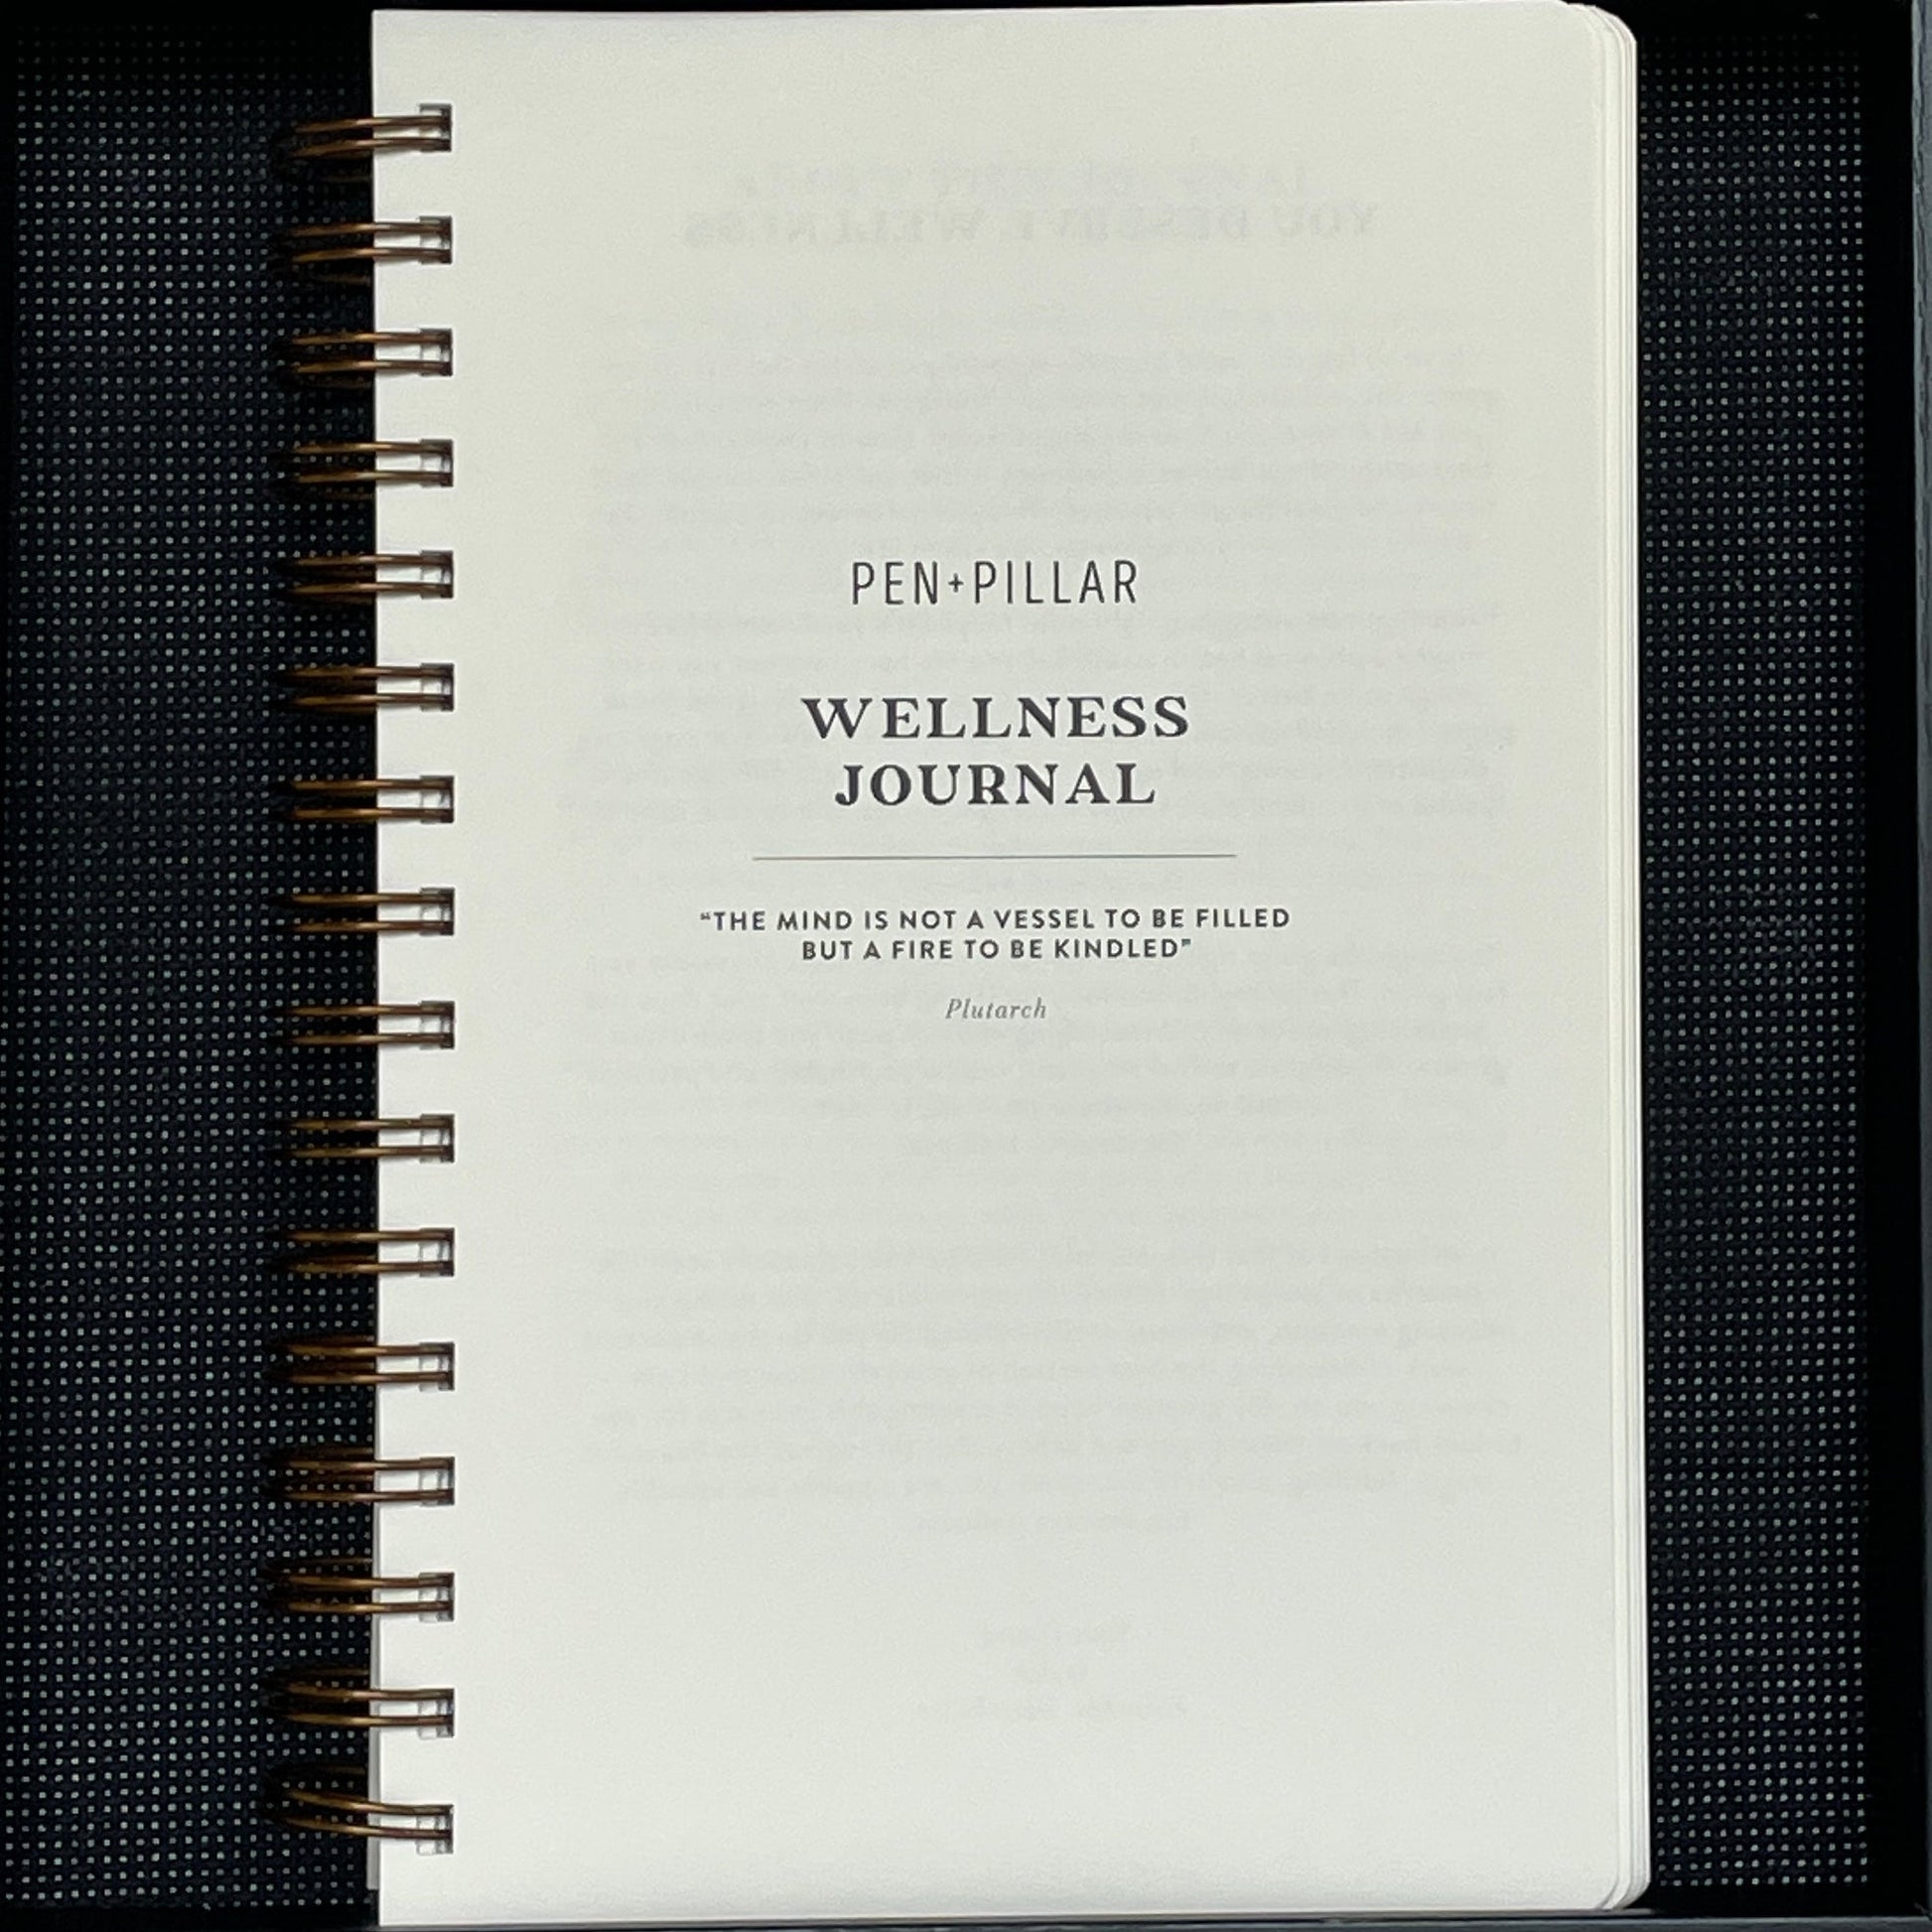 Wellness Journal – Here I Am